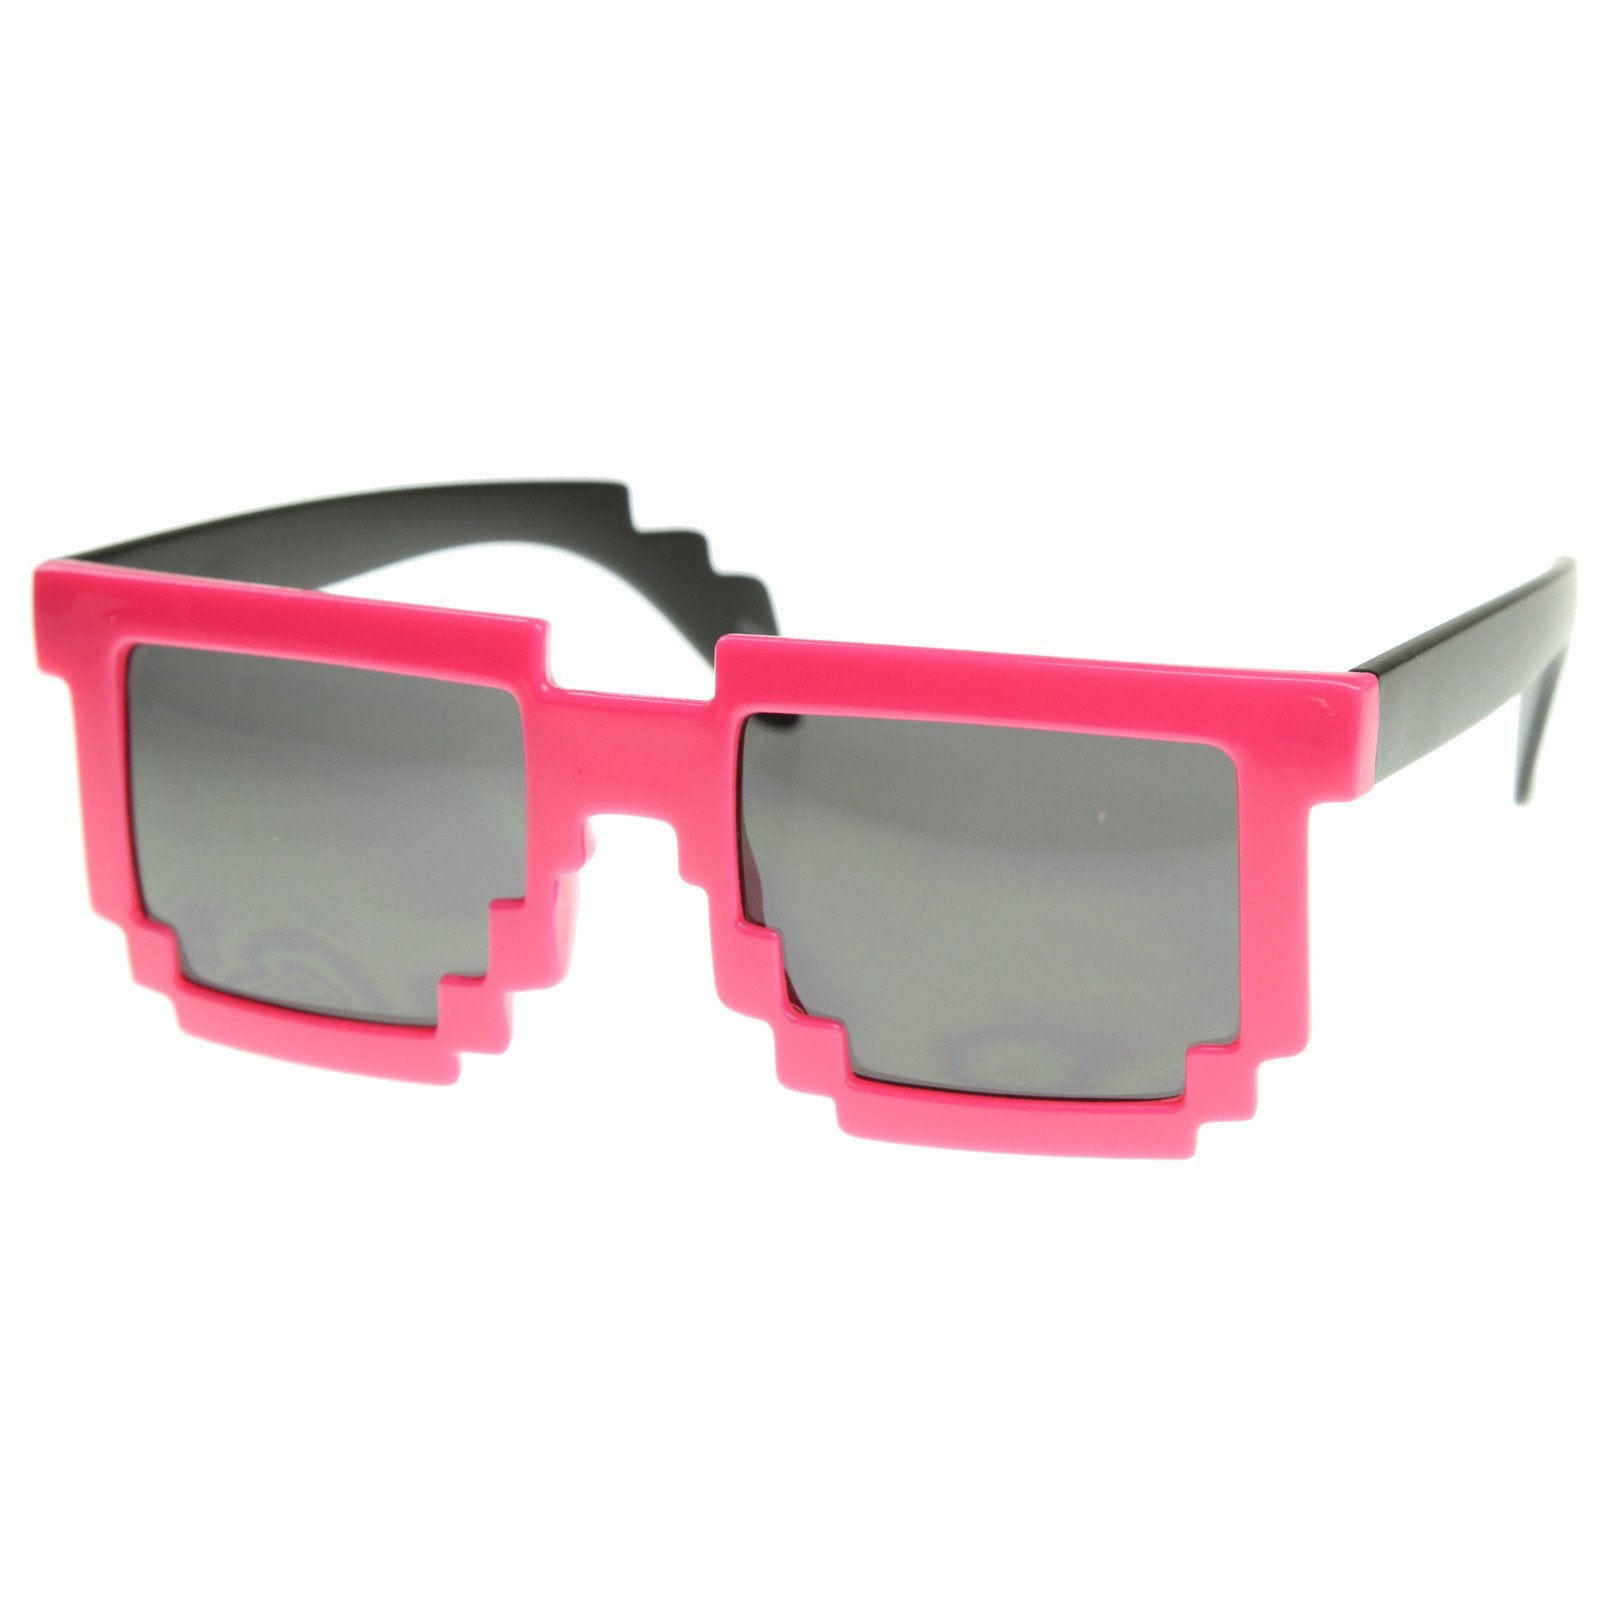 Super Fun Retro Pixelate 8-Bit Geek Sunglasses 8539